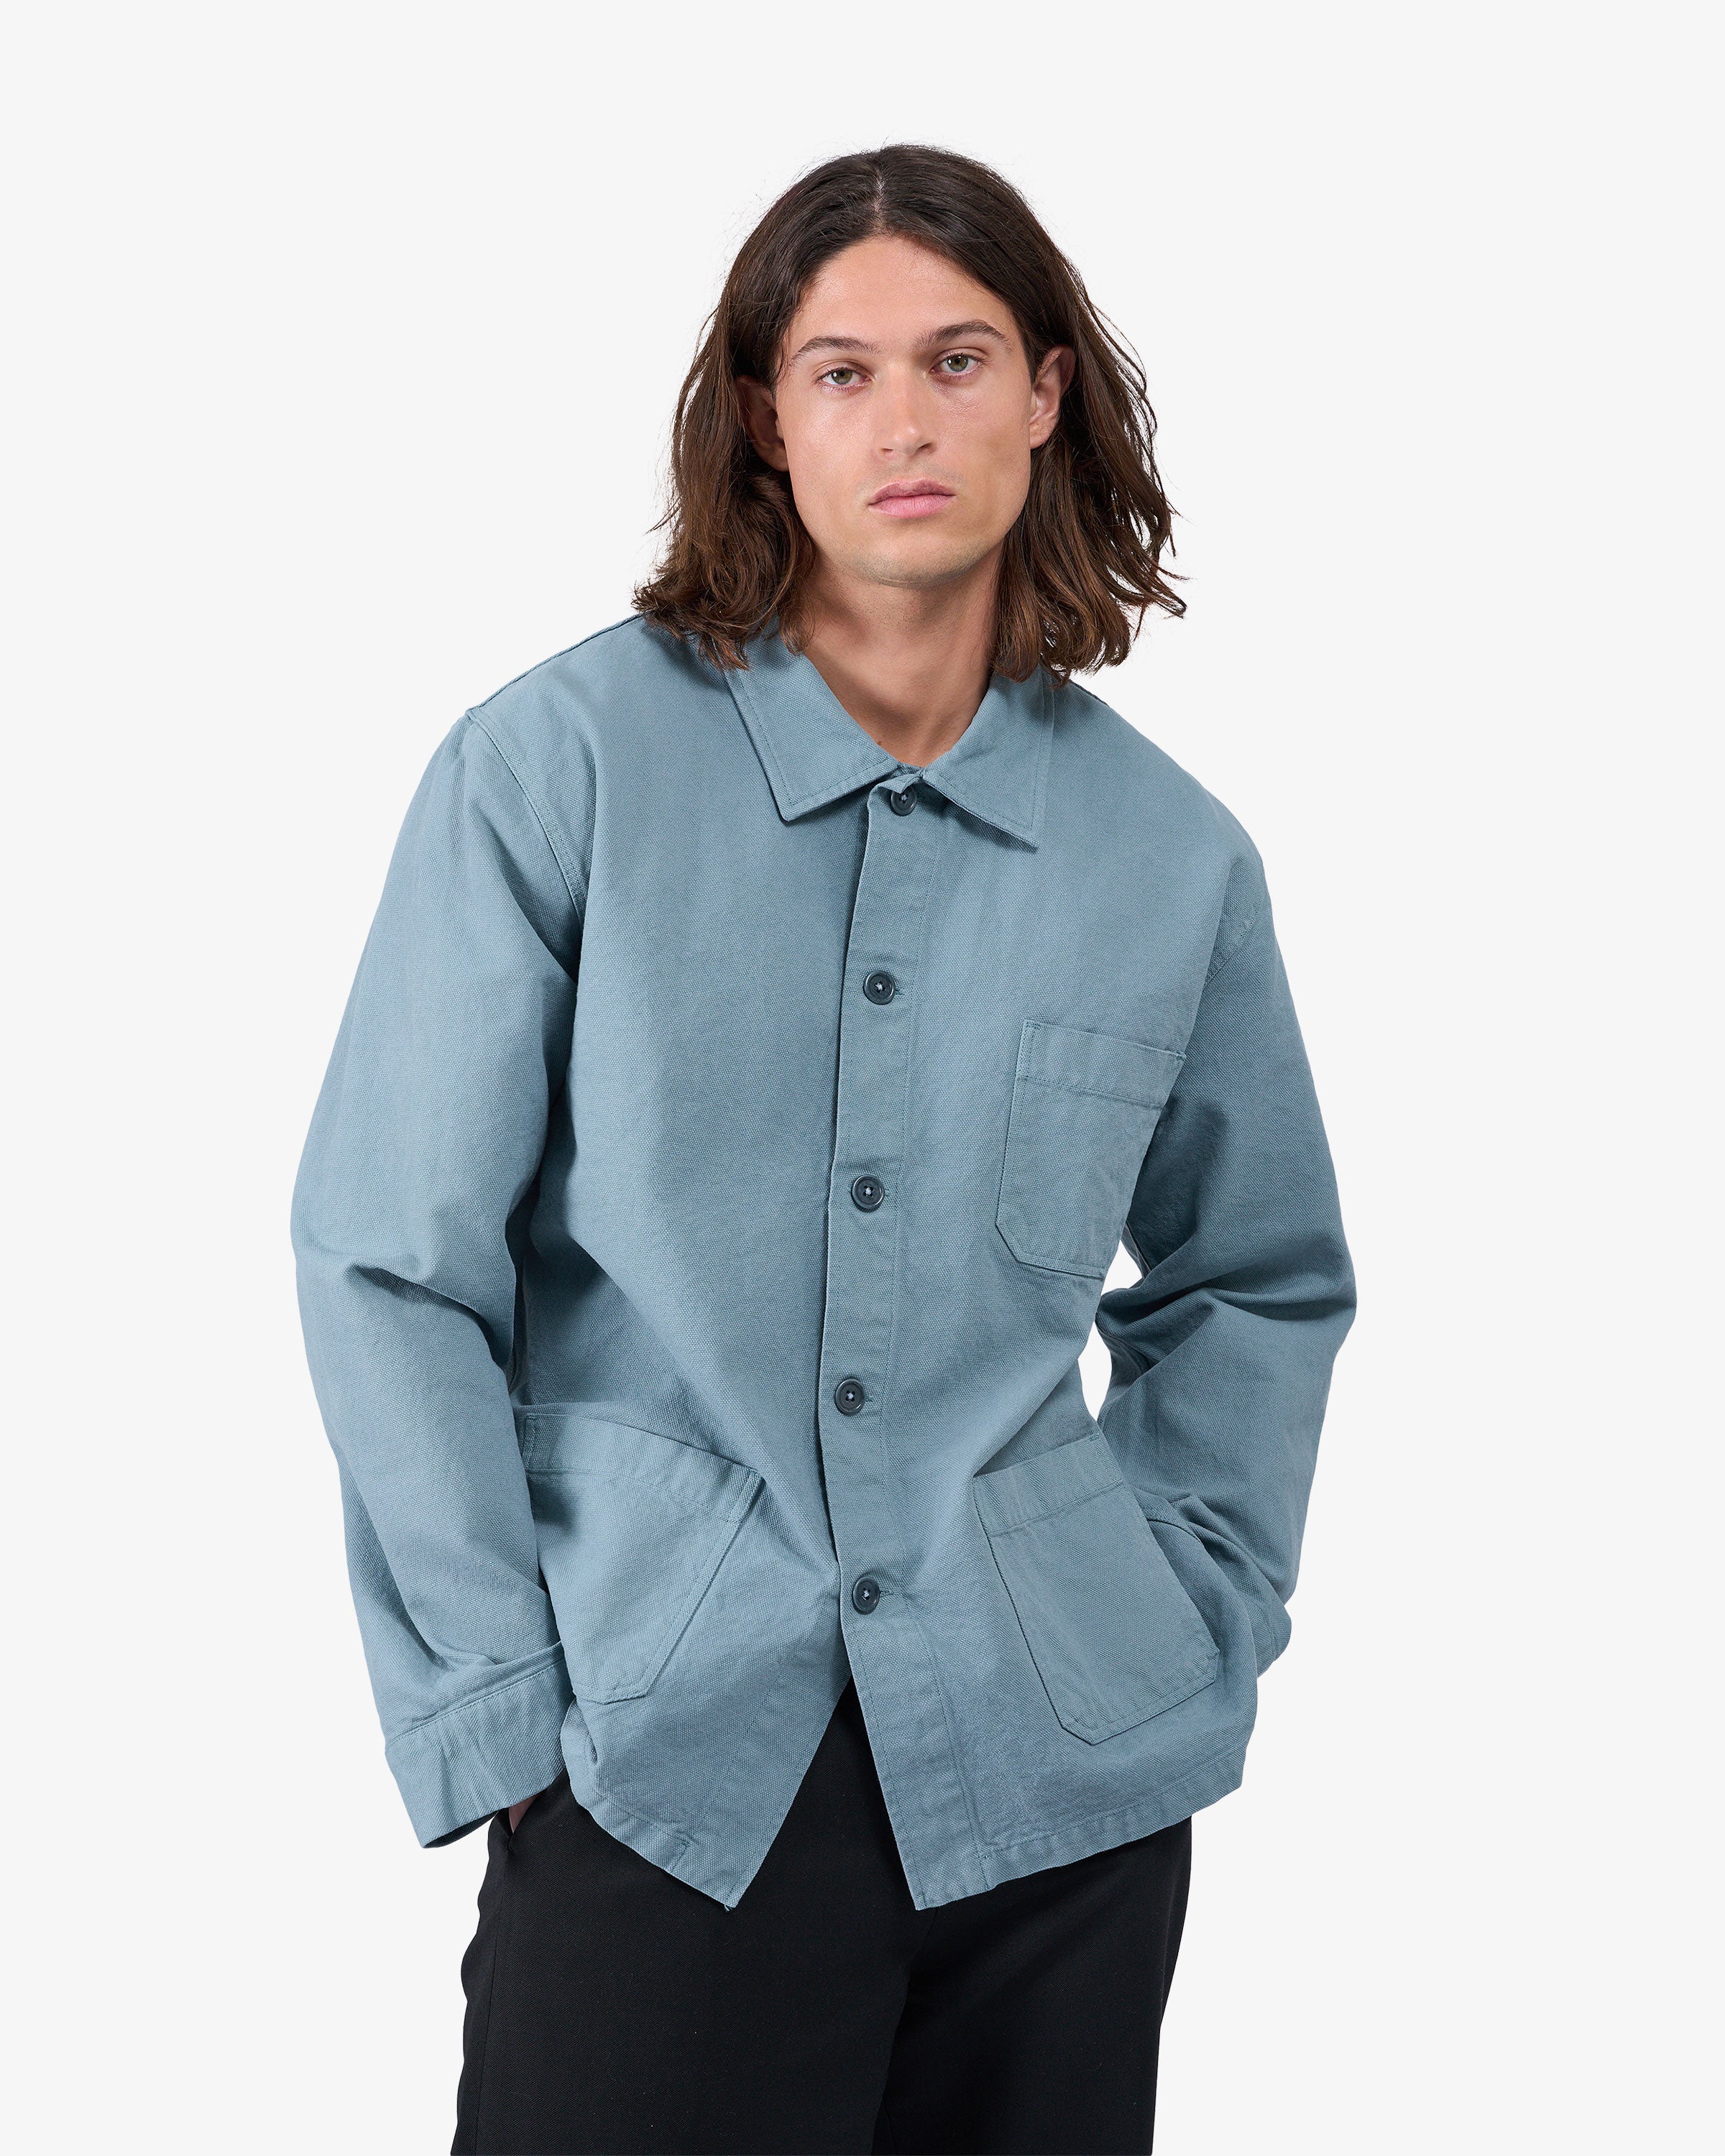 Organic Workwear Jacket - Cedar Brown